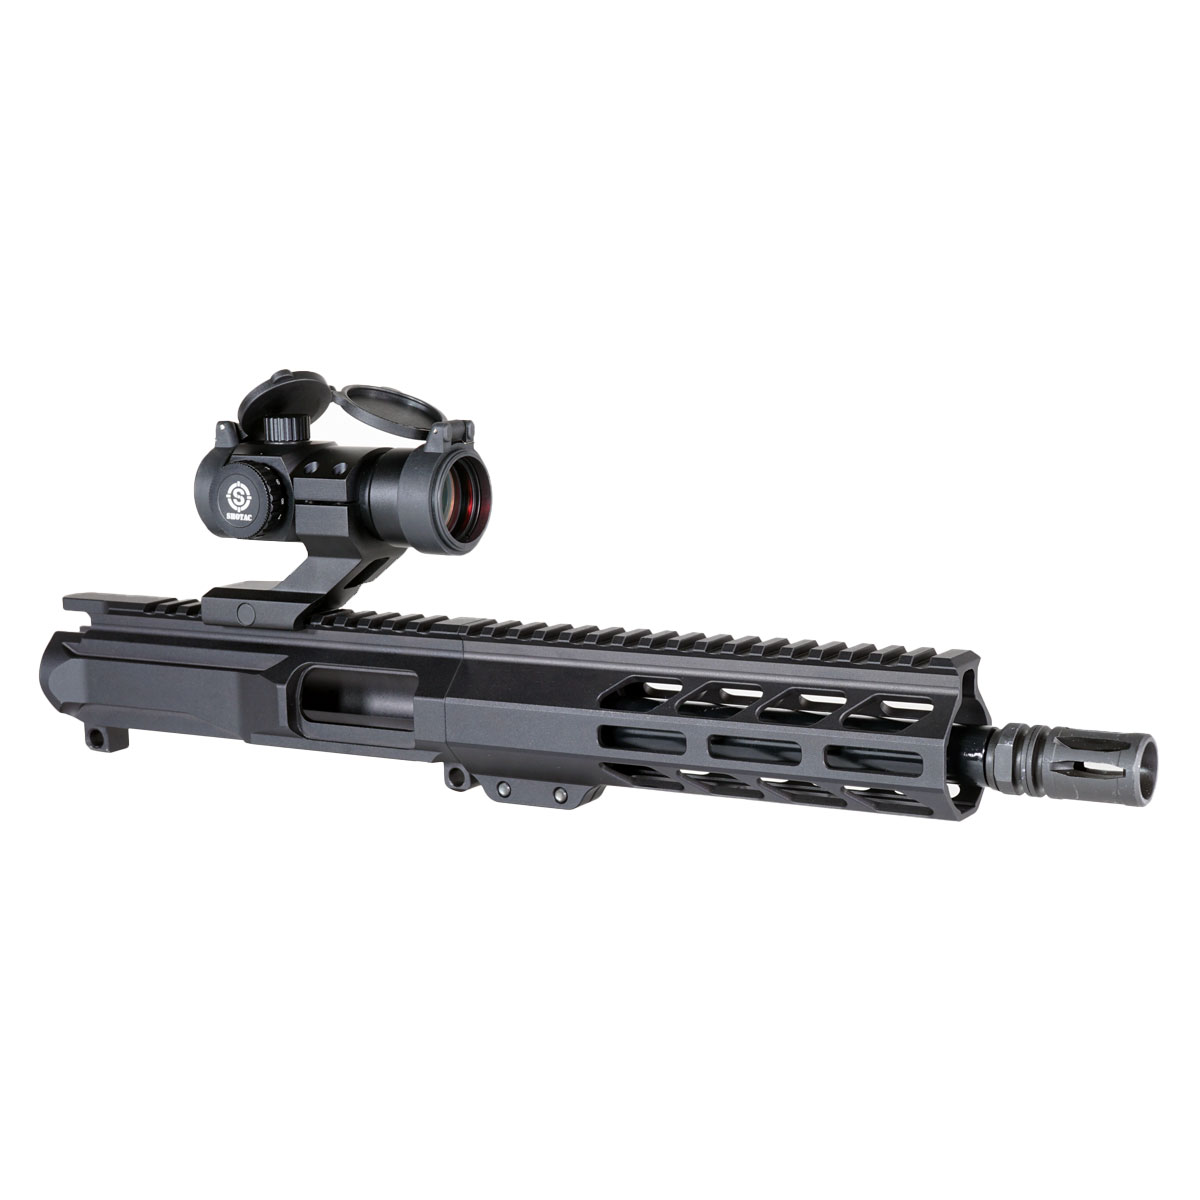 MMC 'Eternal Night Gen 2 w/ Shotac Cantilever' 8.5-inch AR-15 9mm Nitride Pistol Upper Build Kit